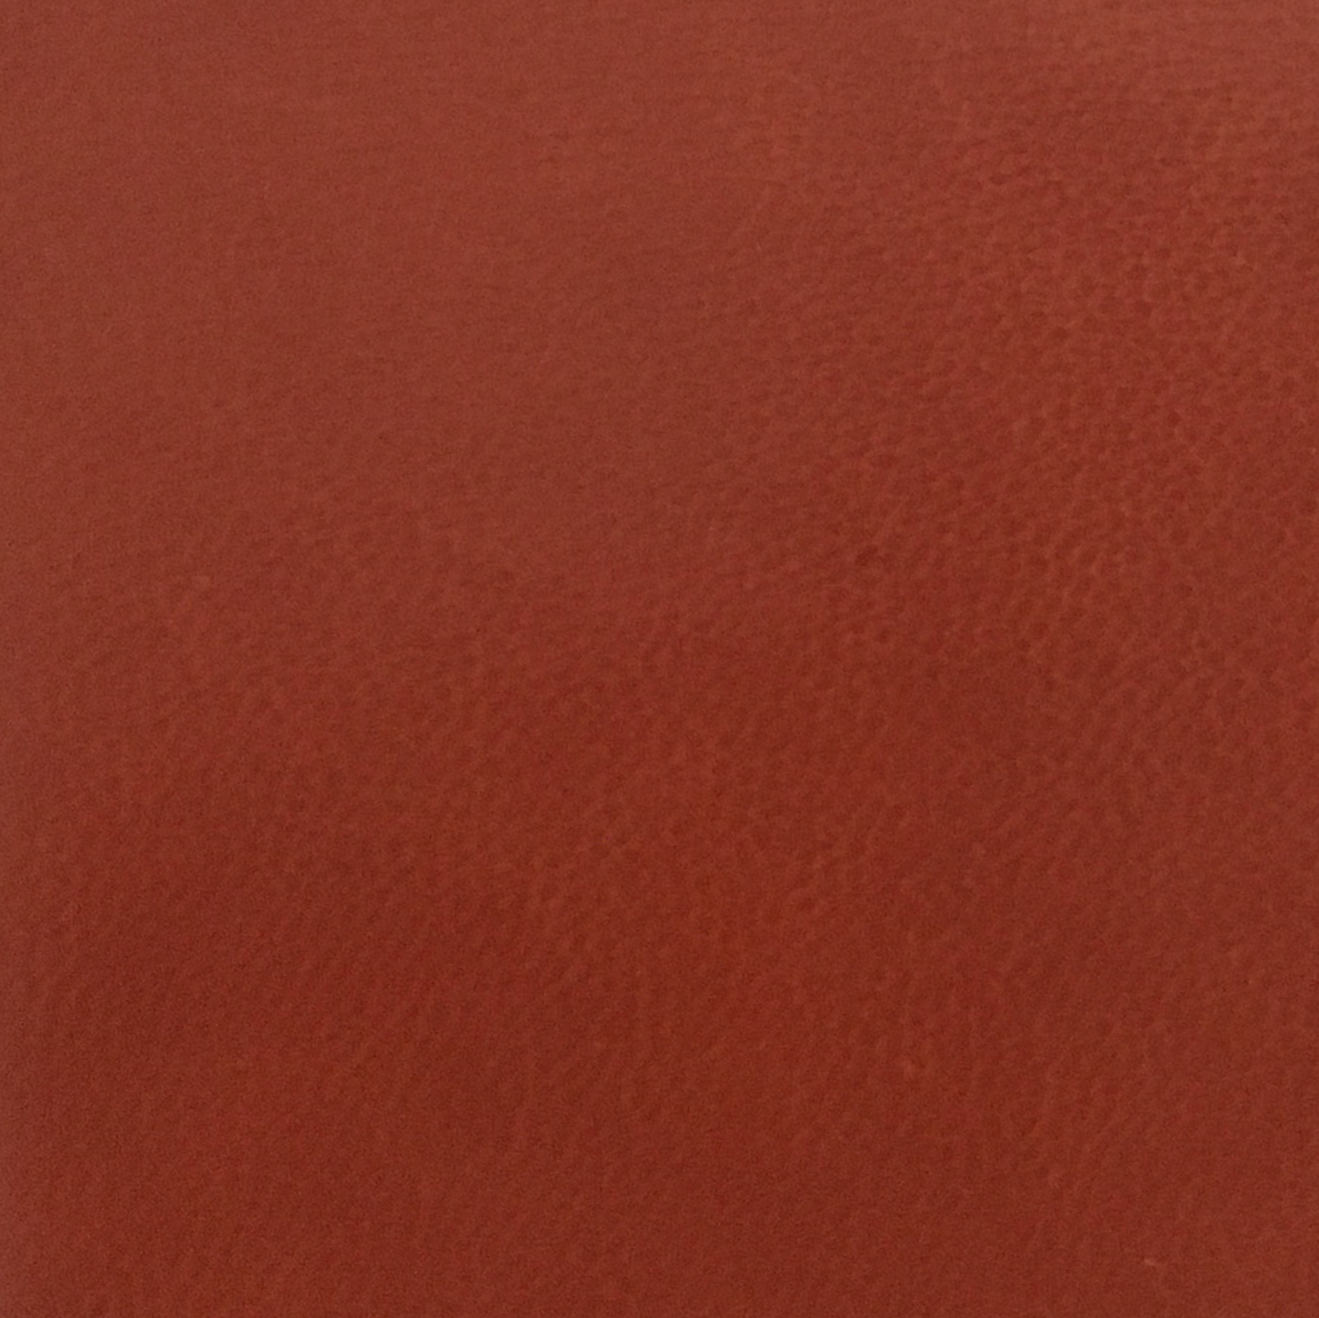 Olympus TRIP35  with armagnac brown leather